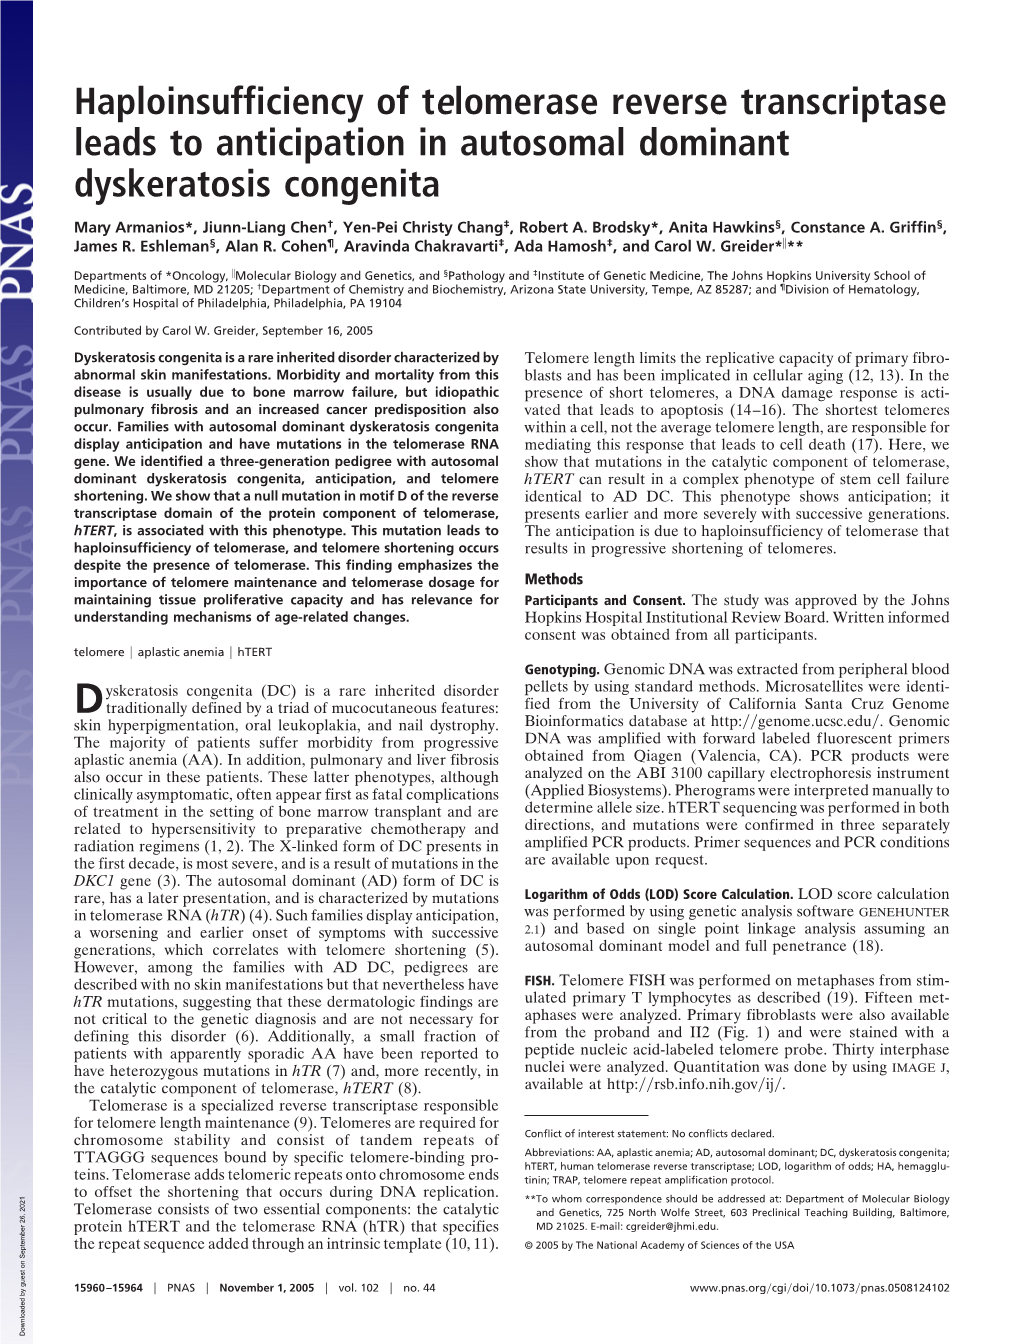 Haploinsufficiency of Telomerase Reverse Transcriptase Leads to Anticipation in Autosomal Dominant Dyskeratosis Congenita